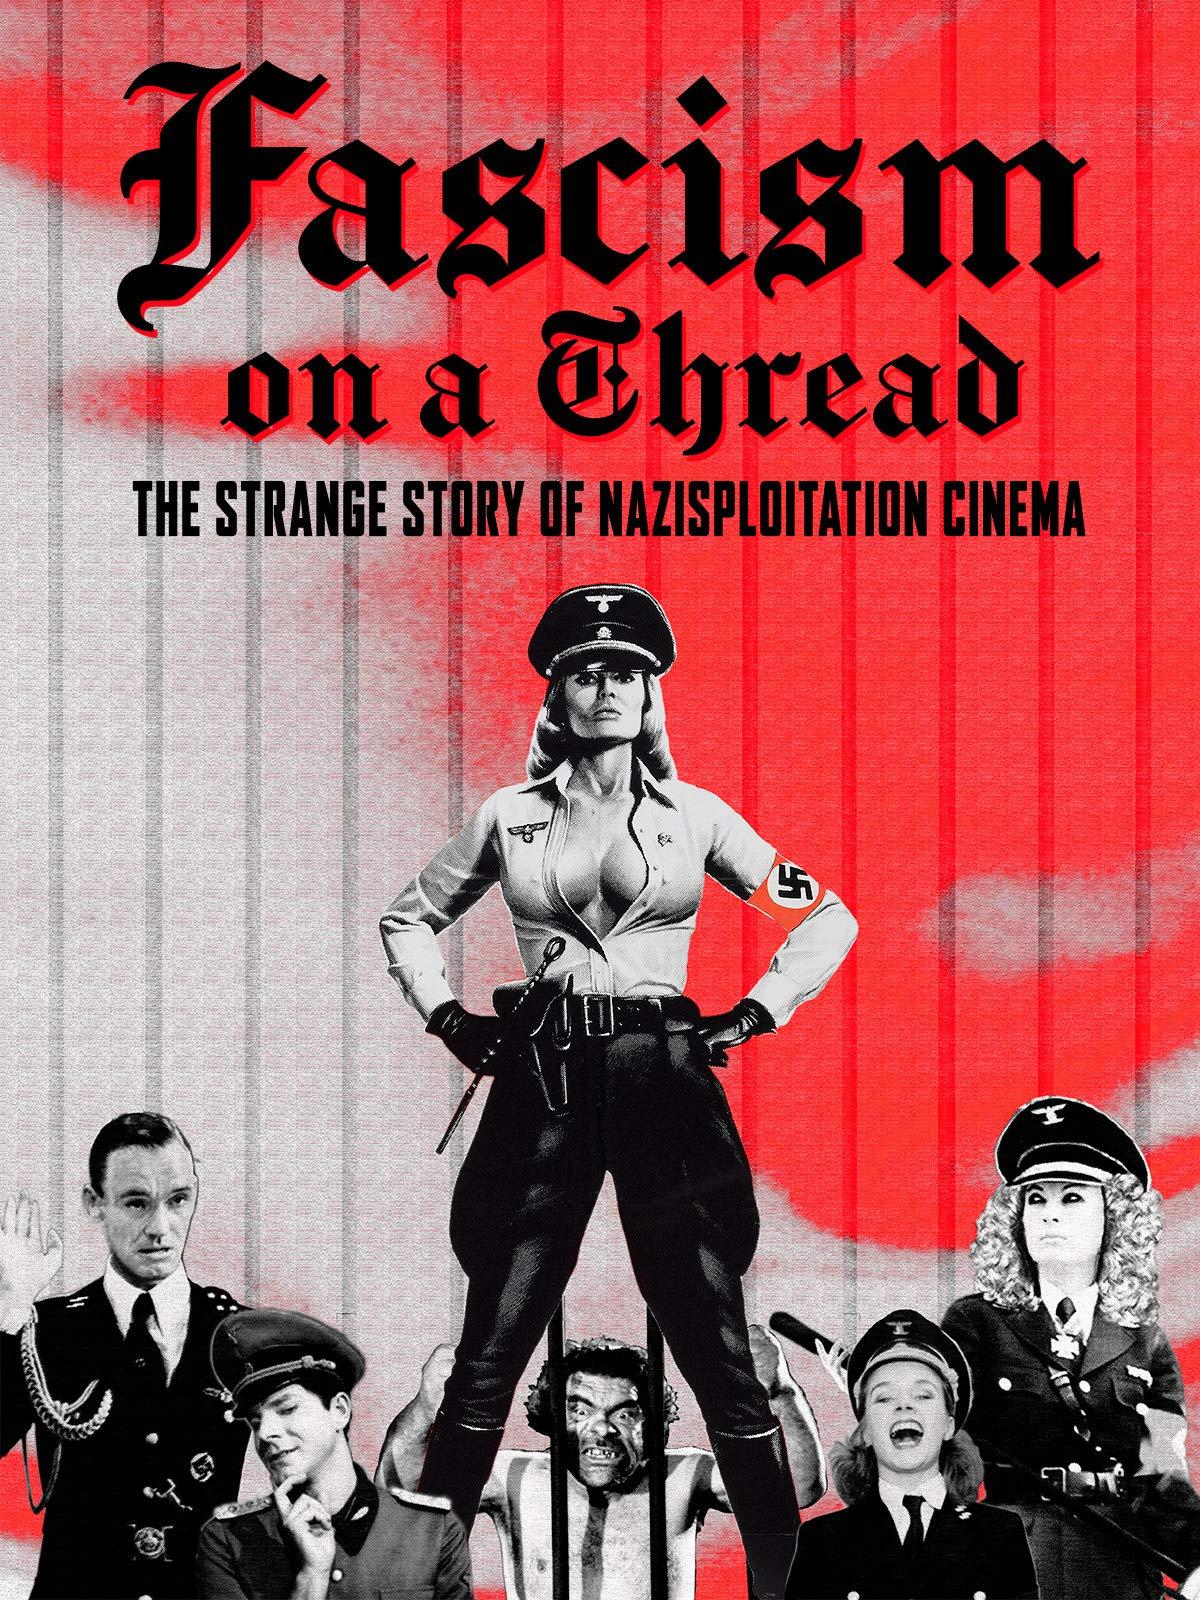 Fascism on a Thread- The Strange Story of Nazisploitation Cinema (2019) Screenshot 2 